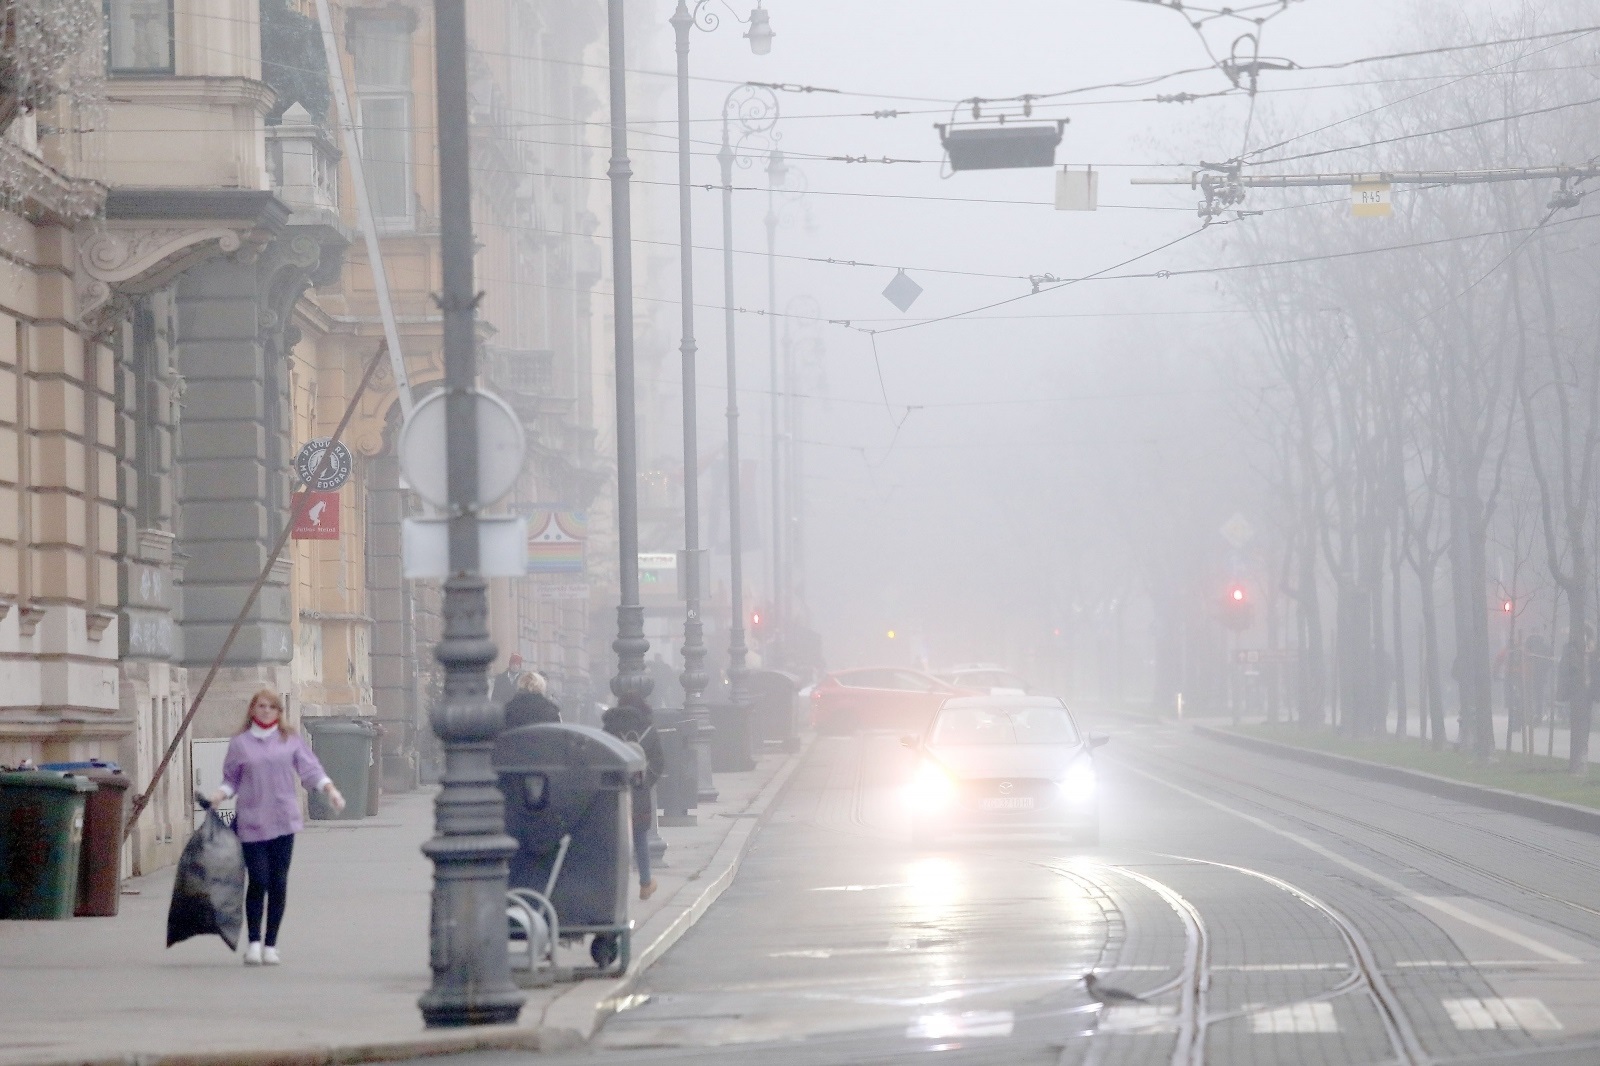 08.12.2020., Zagreb - Nakon jucerasnjeg prekrasnog i toplog dana Zagreb se jutros probudio pod maglom.
Photo: Patrik Macek/PIXSELL